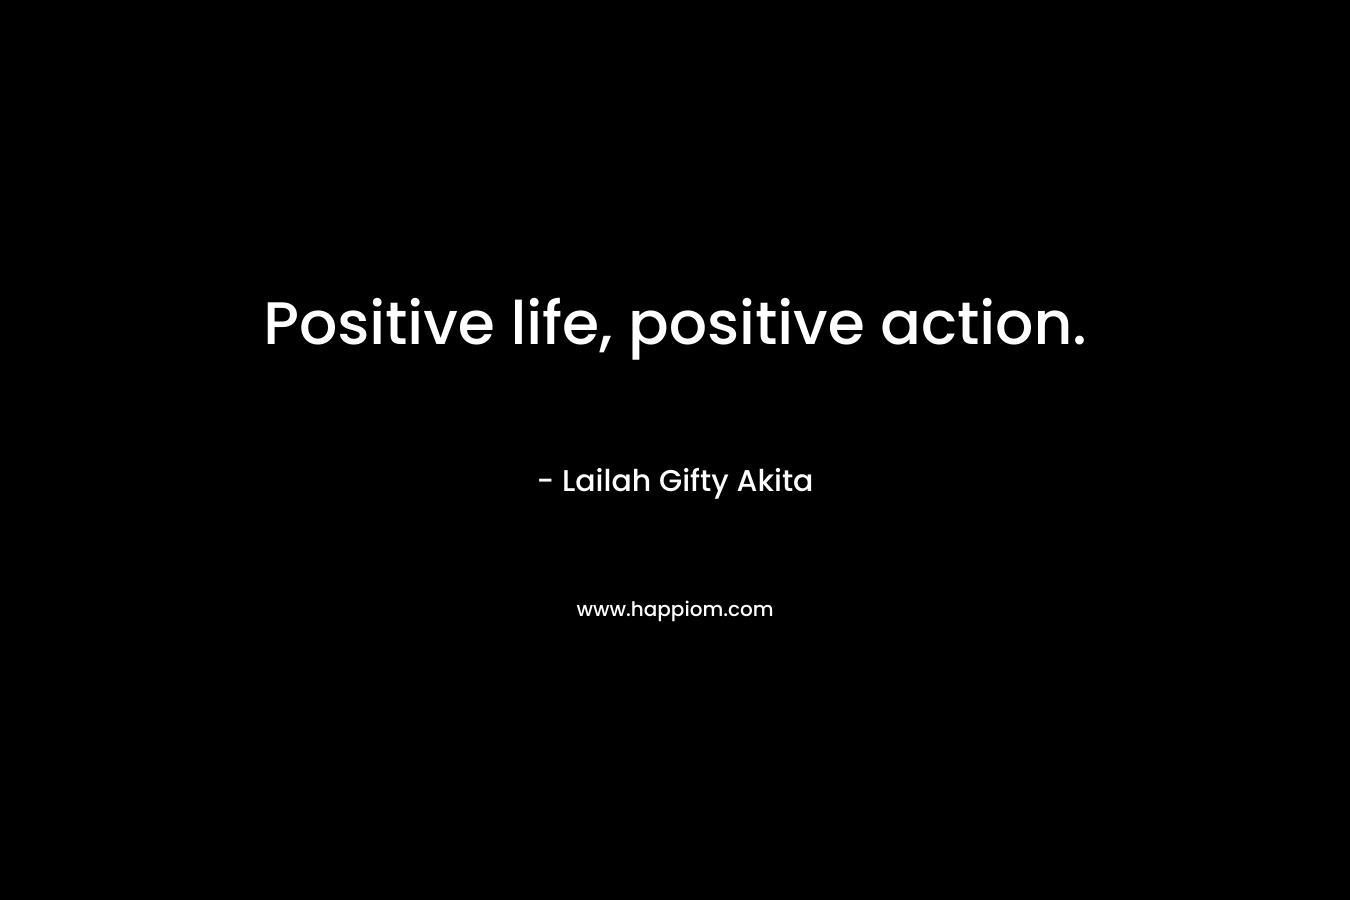 Positive life, positive action.